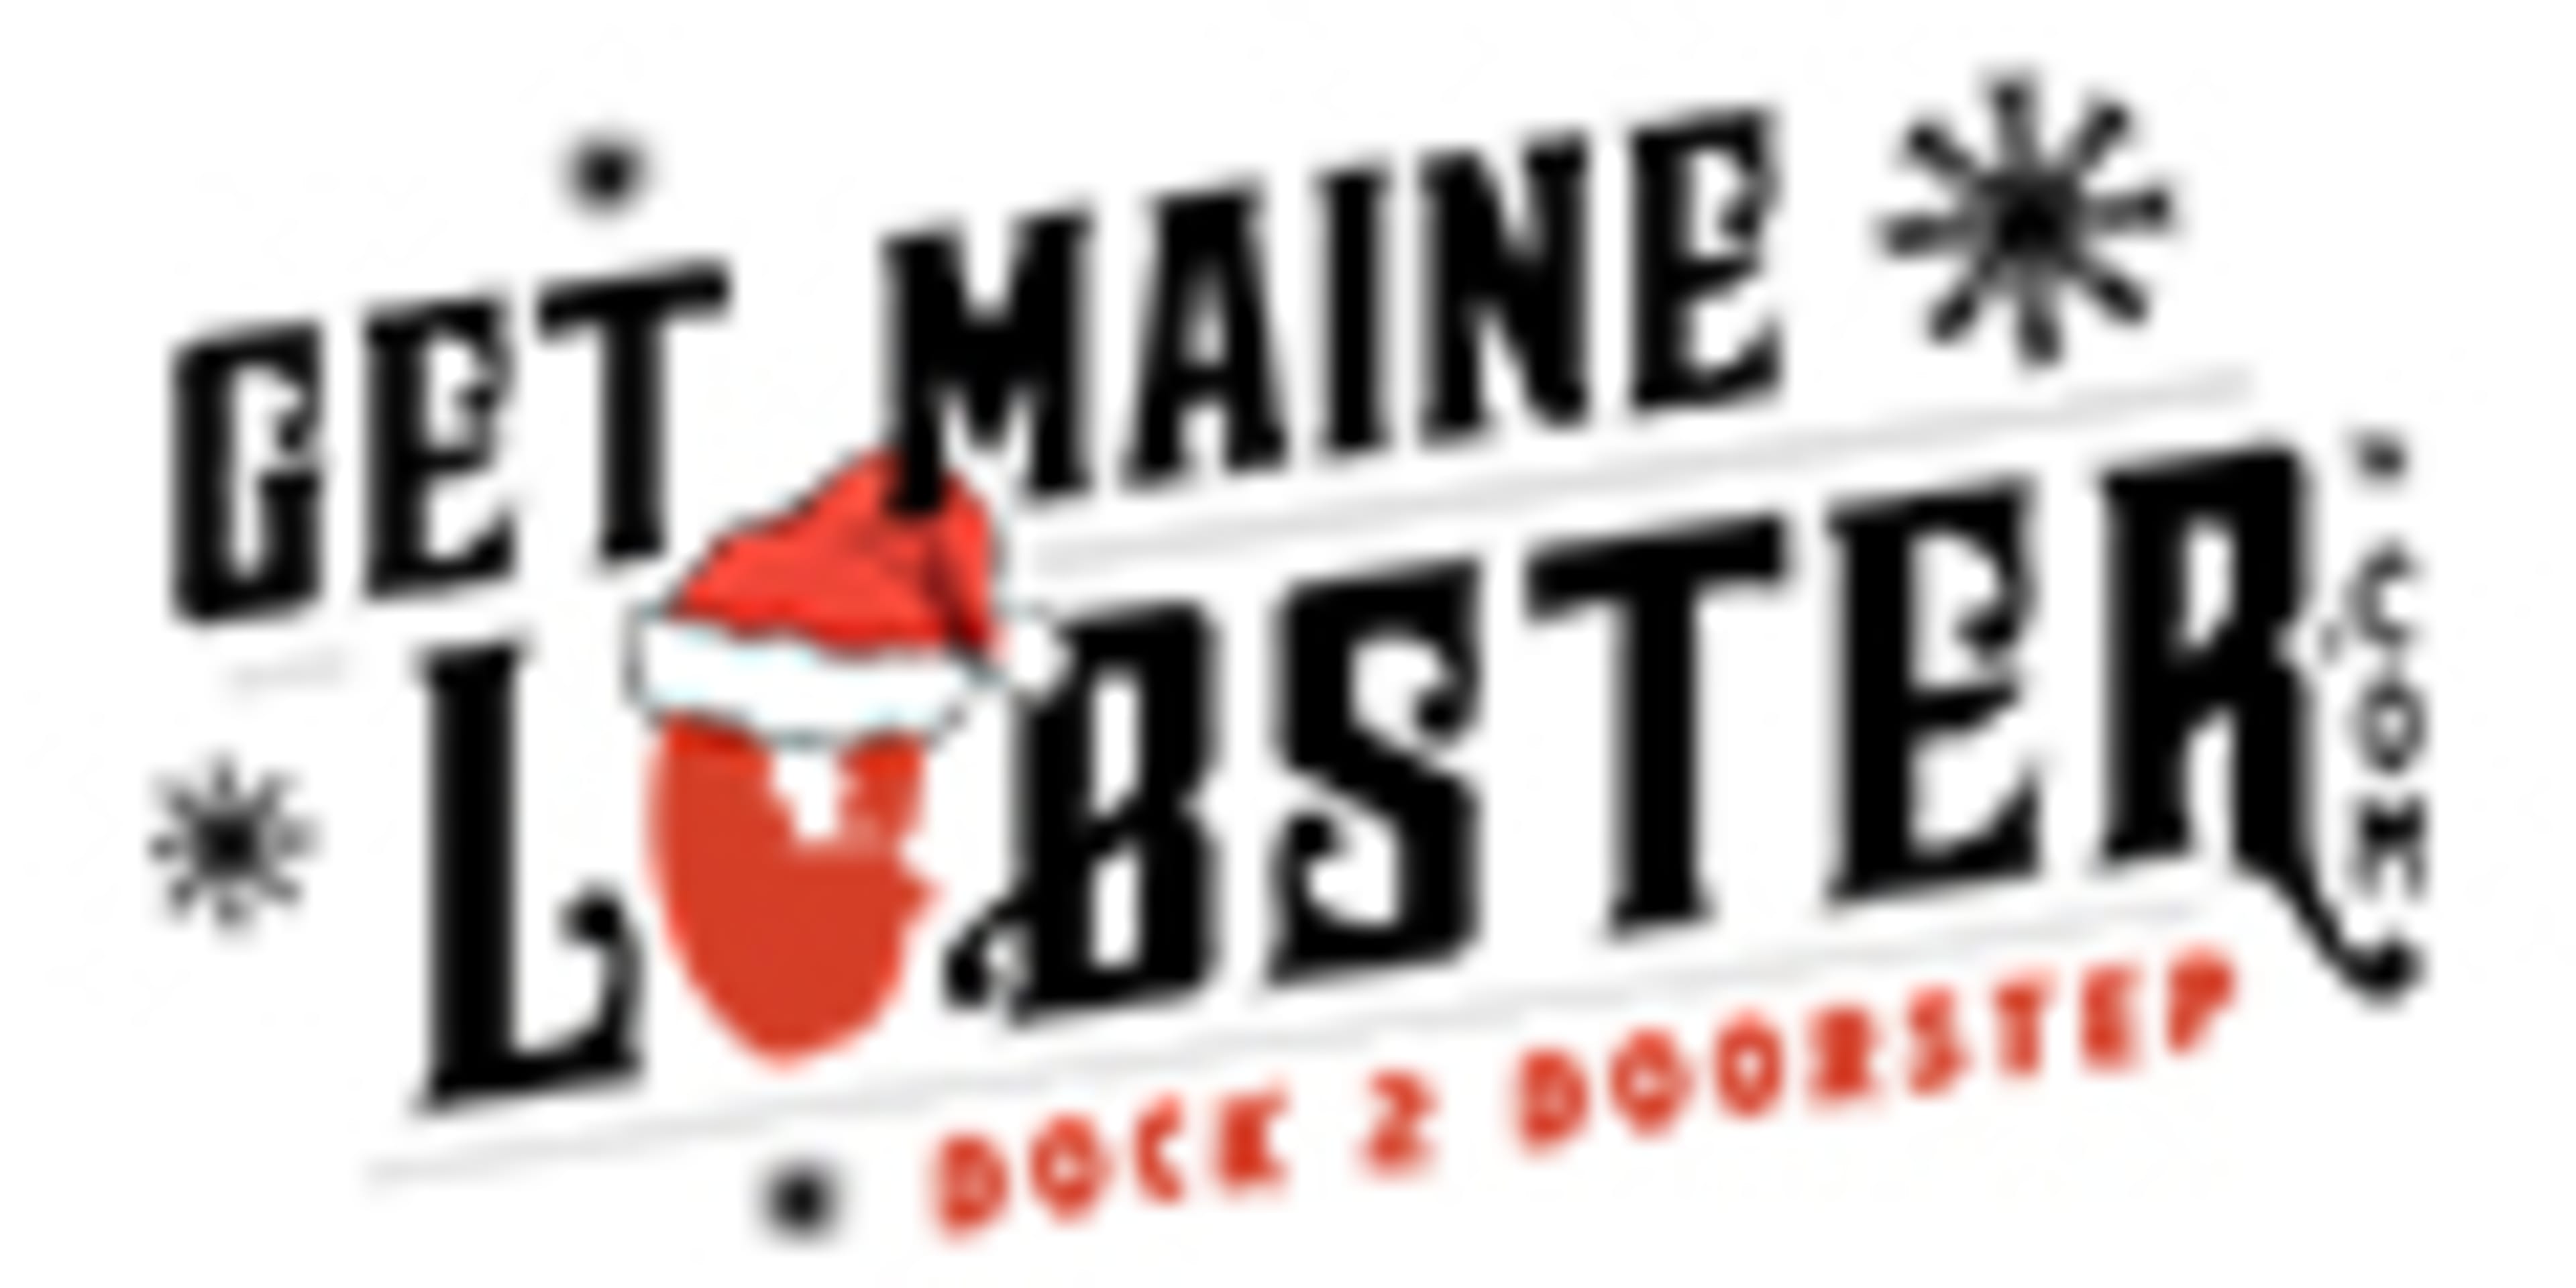 Get Maine Lobster Code